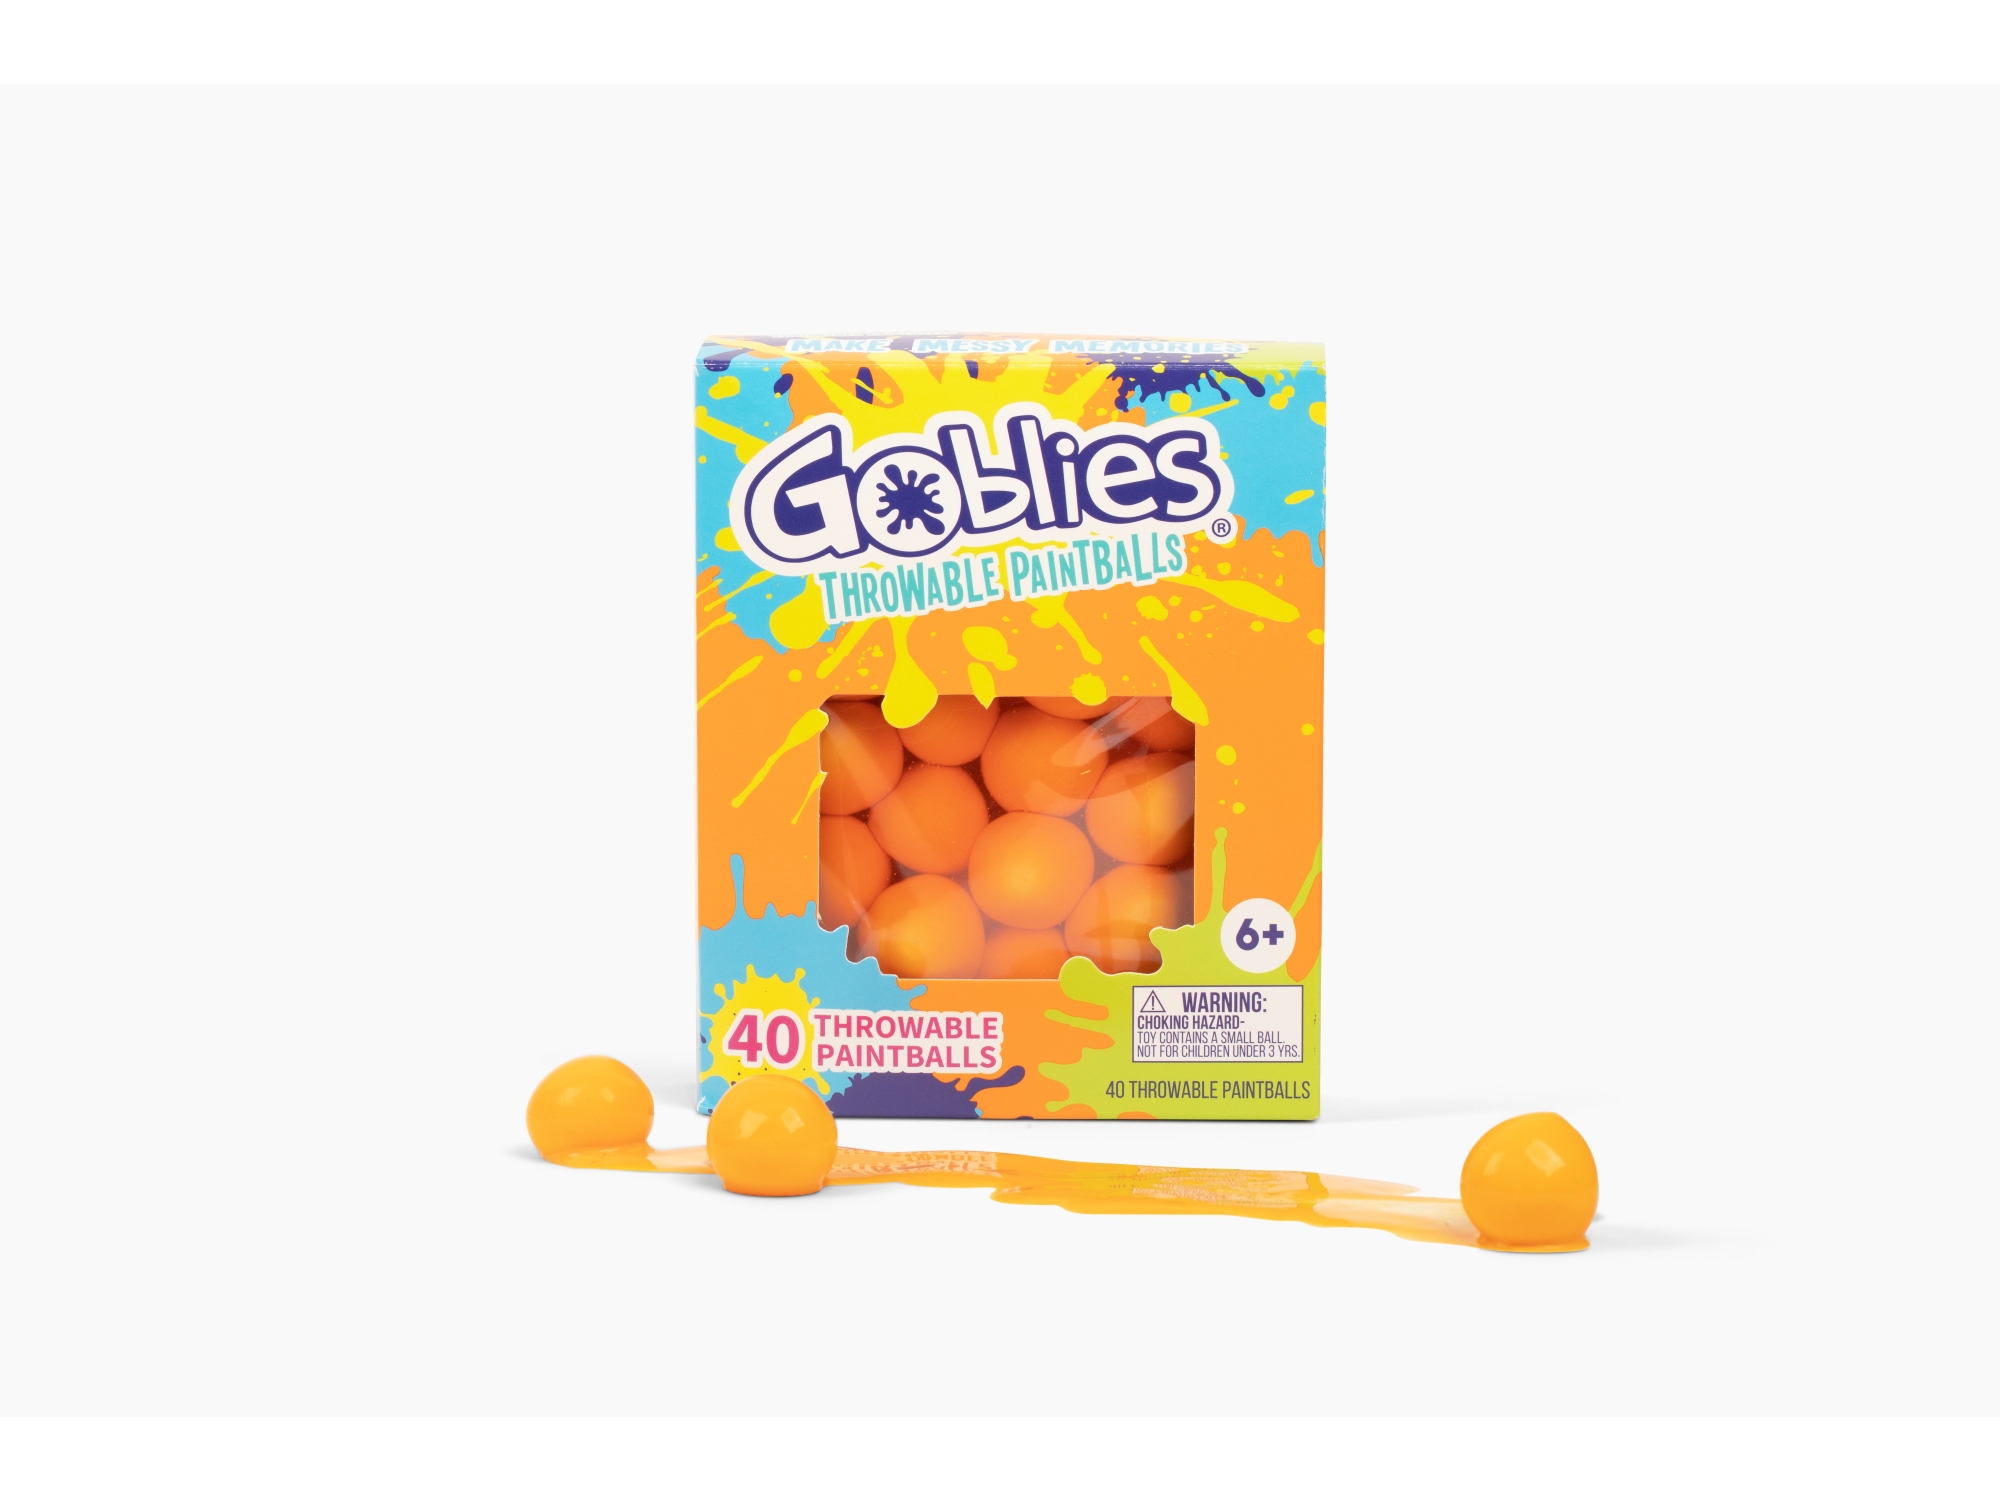 Gobiles Goblies Throwable Paintballs 40ct, Orange